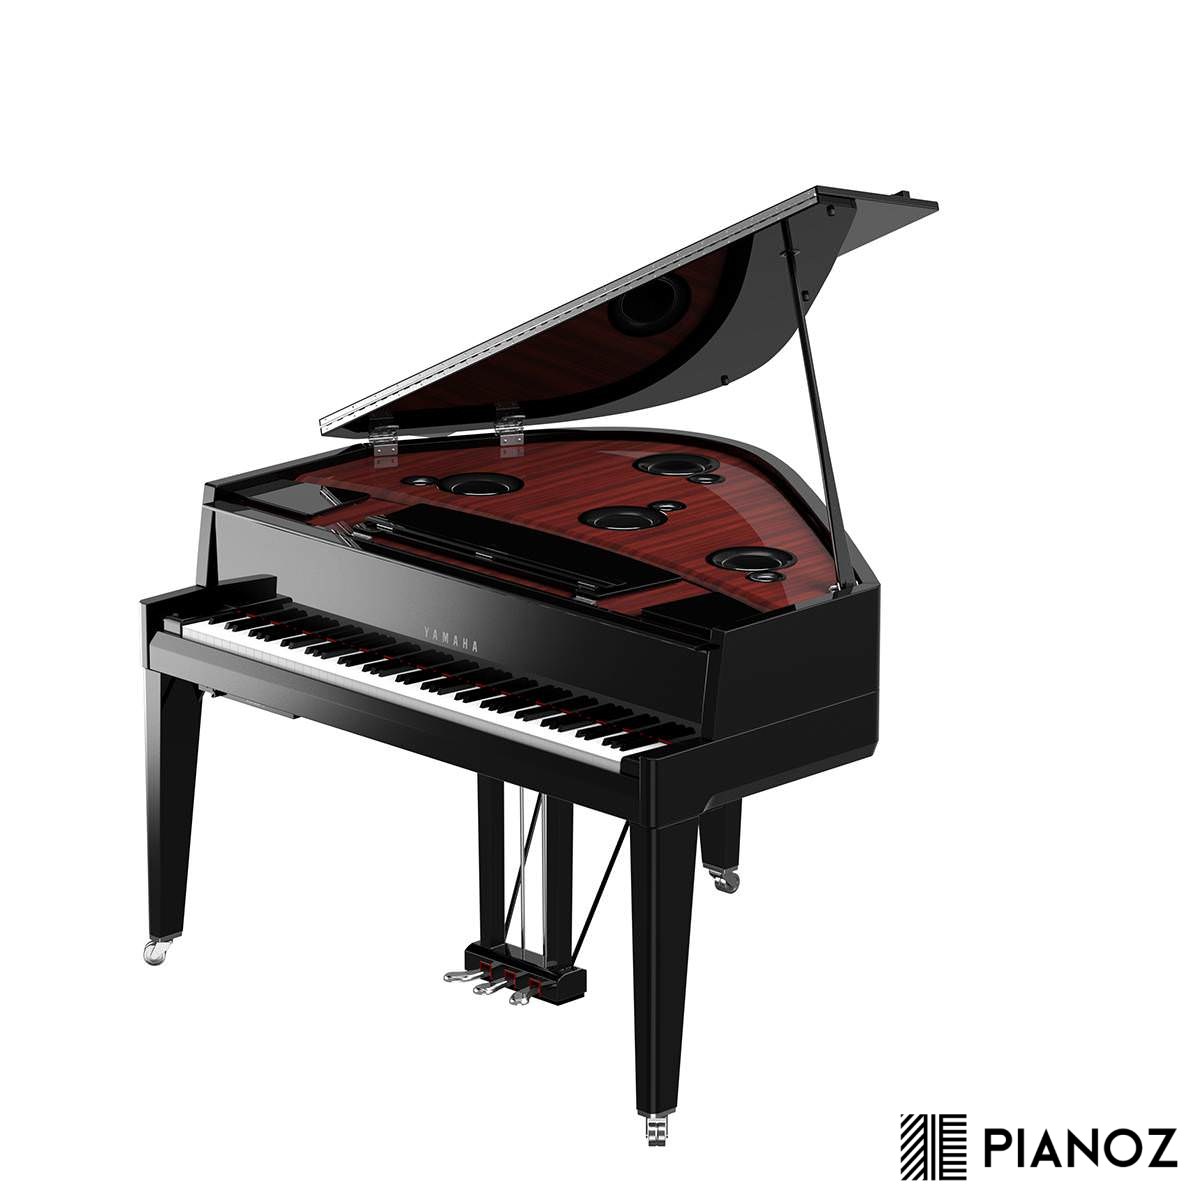 Yamaha N3X Avantgrand Baby Grand Piano piano for sale in UK